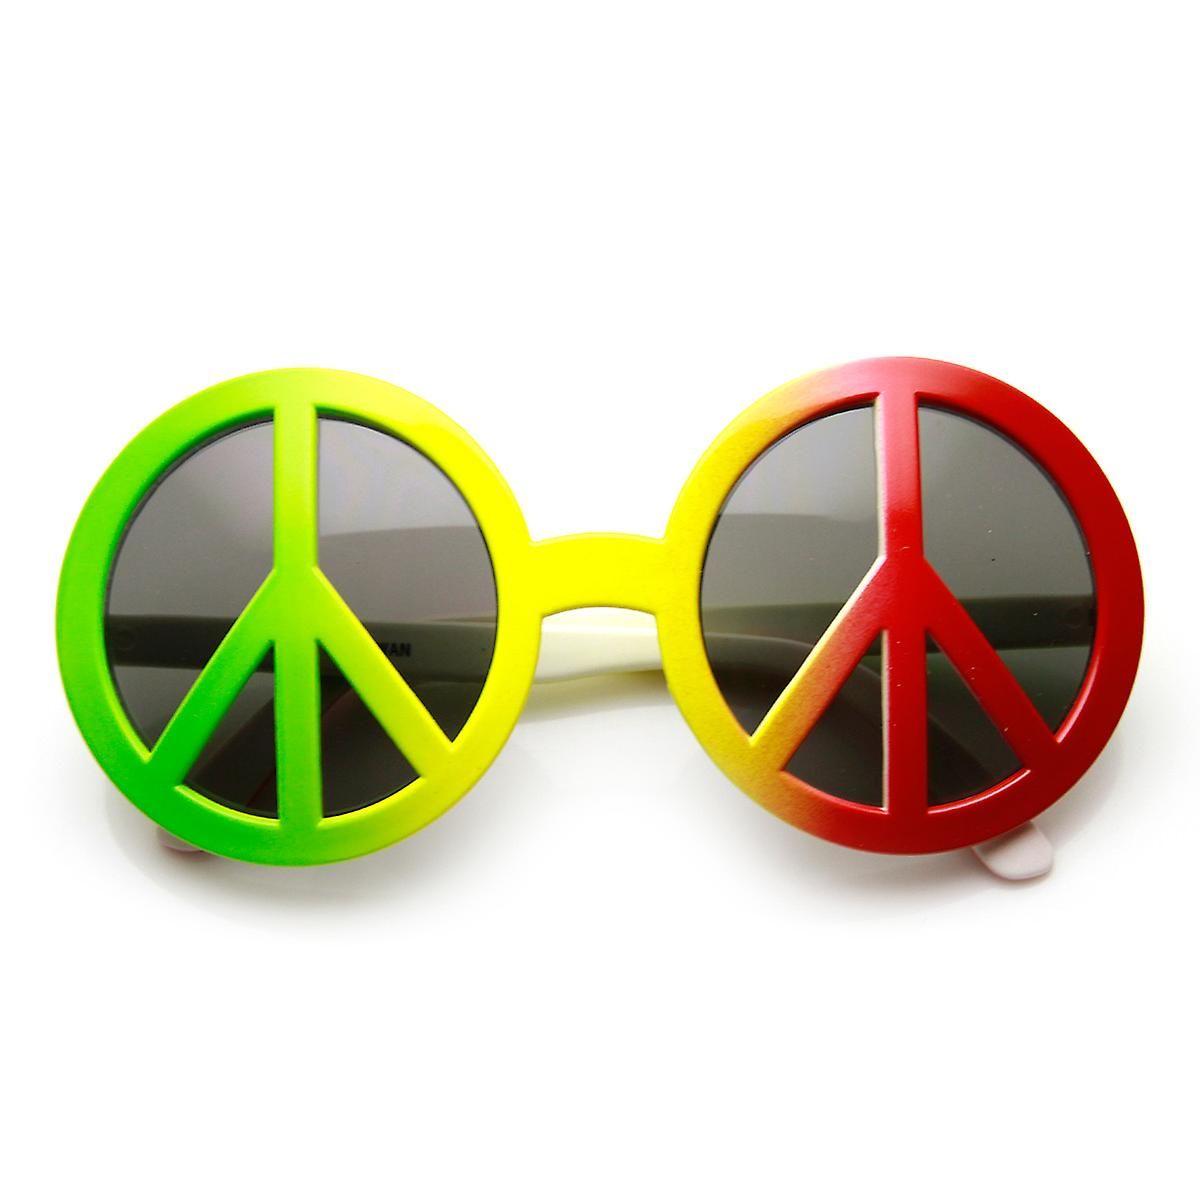 Hippie Glasses Logo - Peace Sign 70's Era Hippie Free Love Woodstock Novelty Costume Party ...